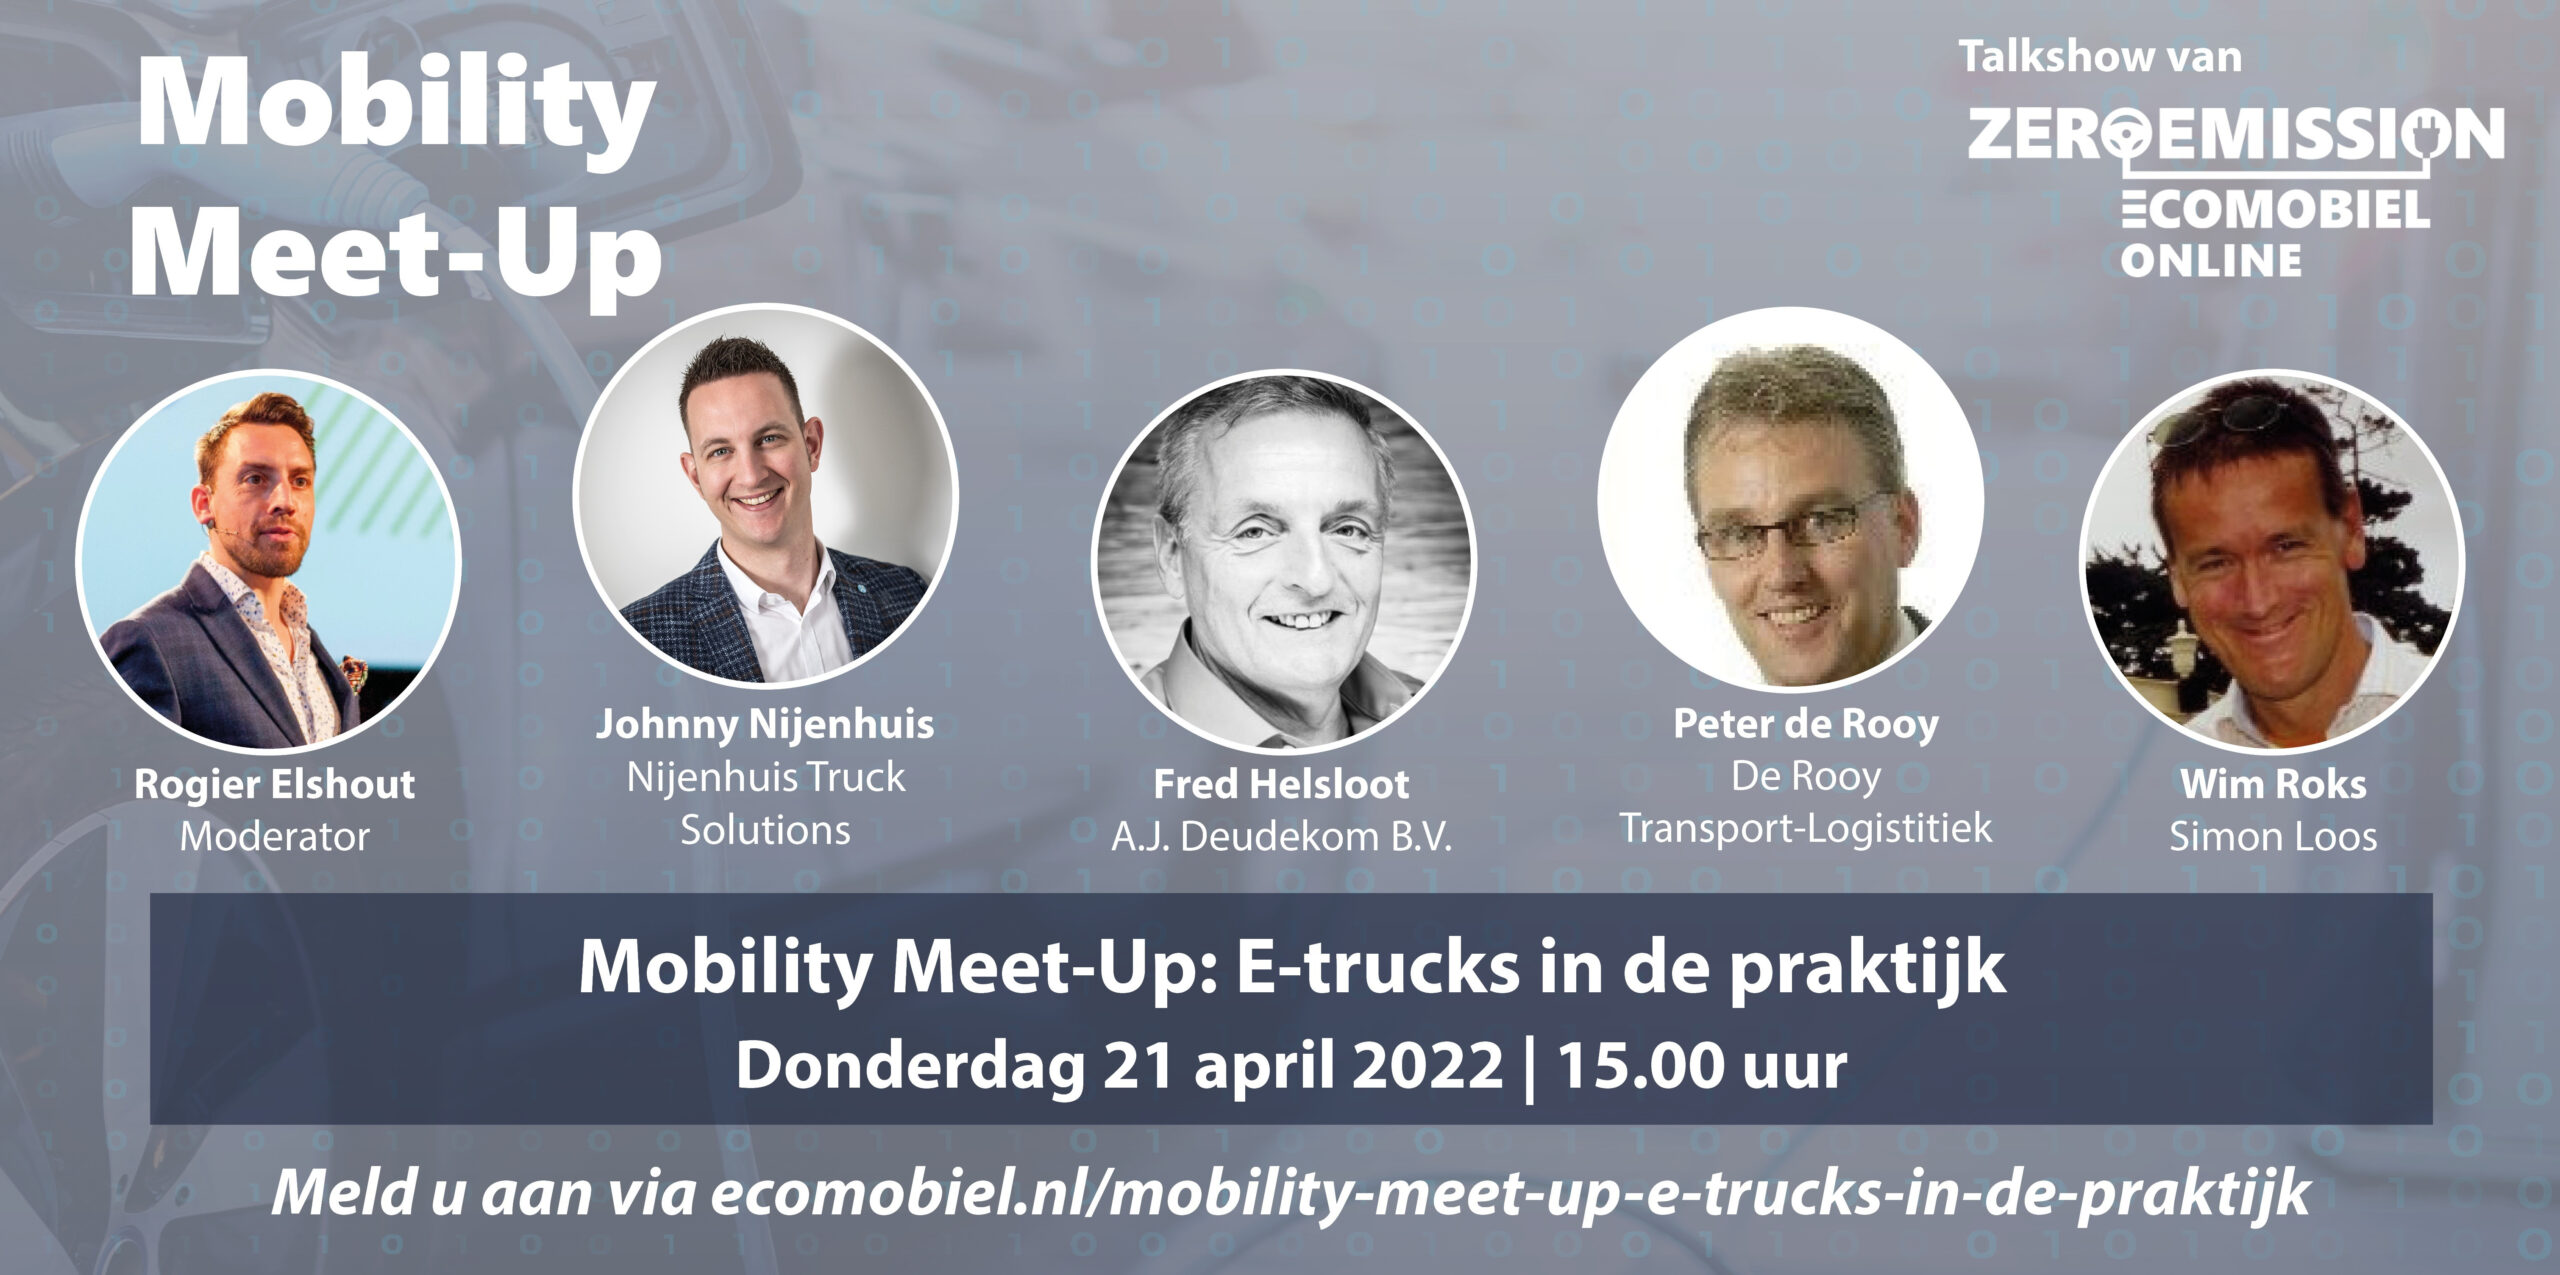 Mobility Meet-Up: E-trucks in de praktijk